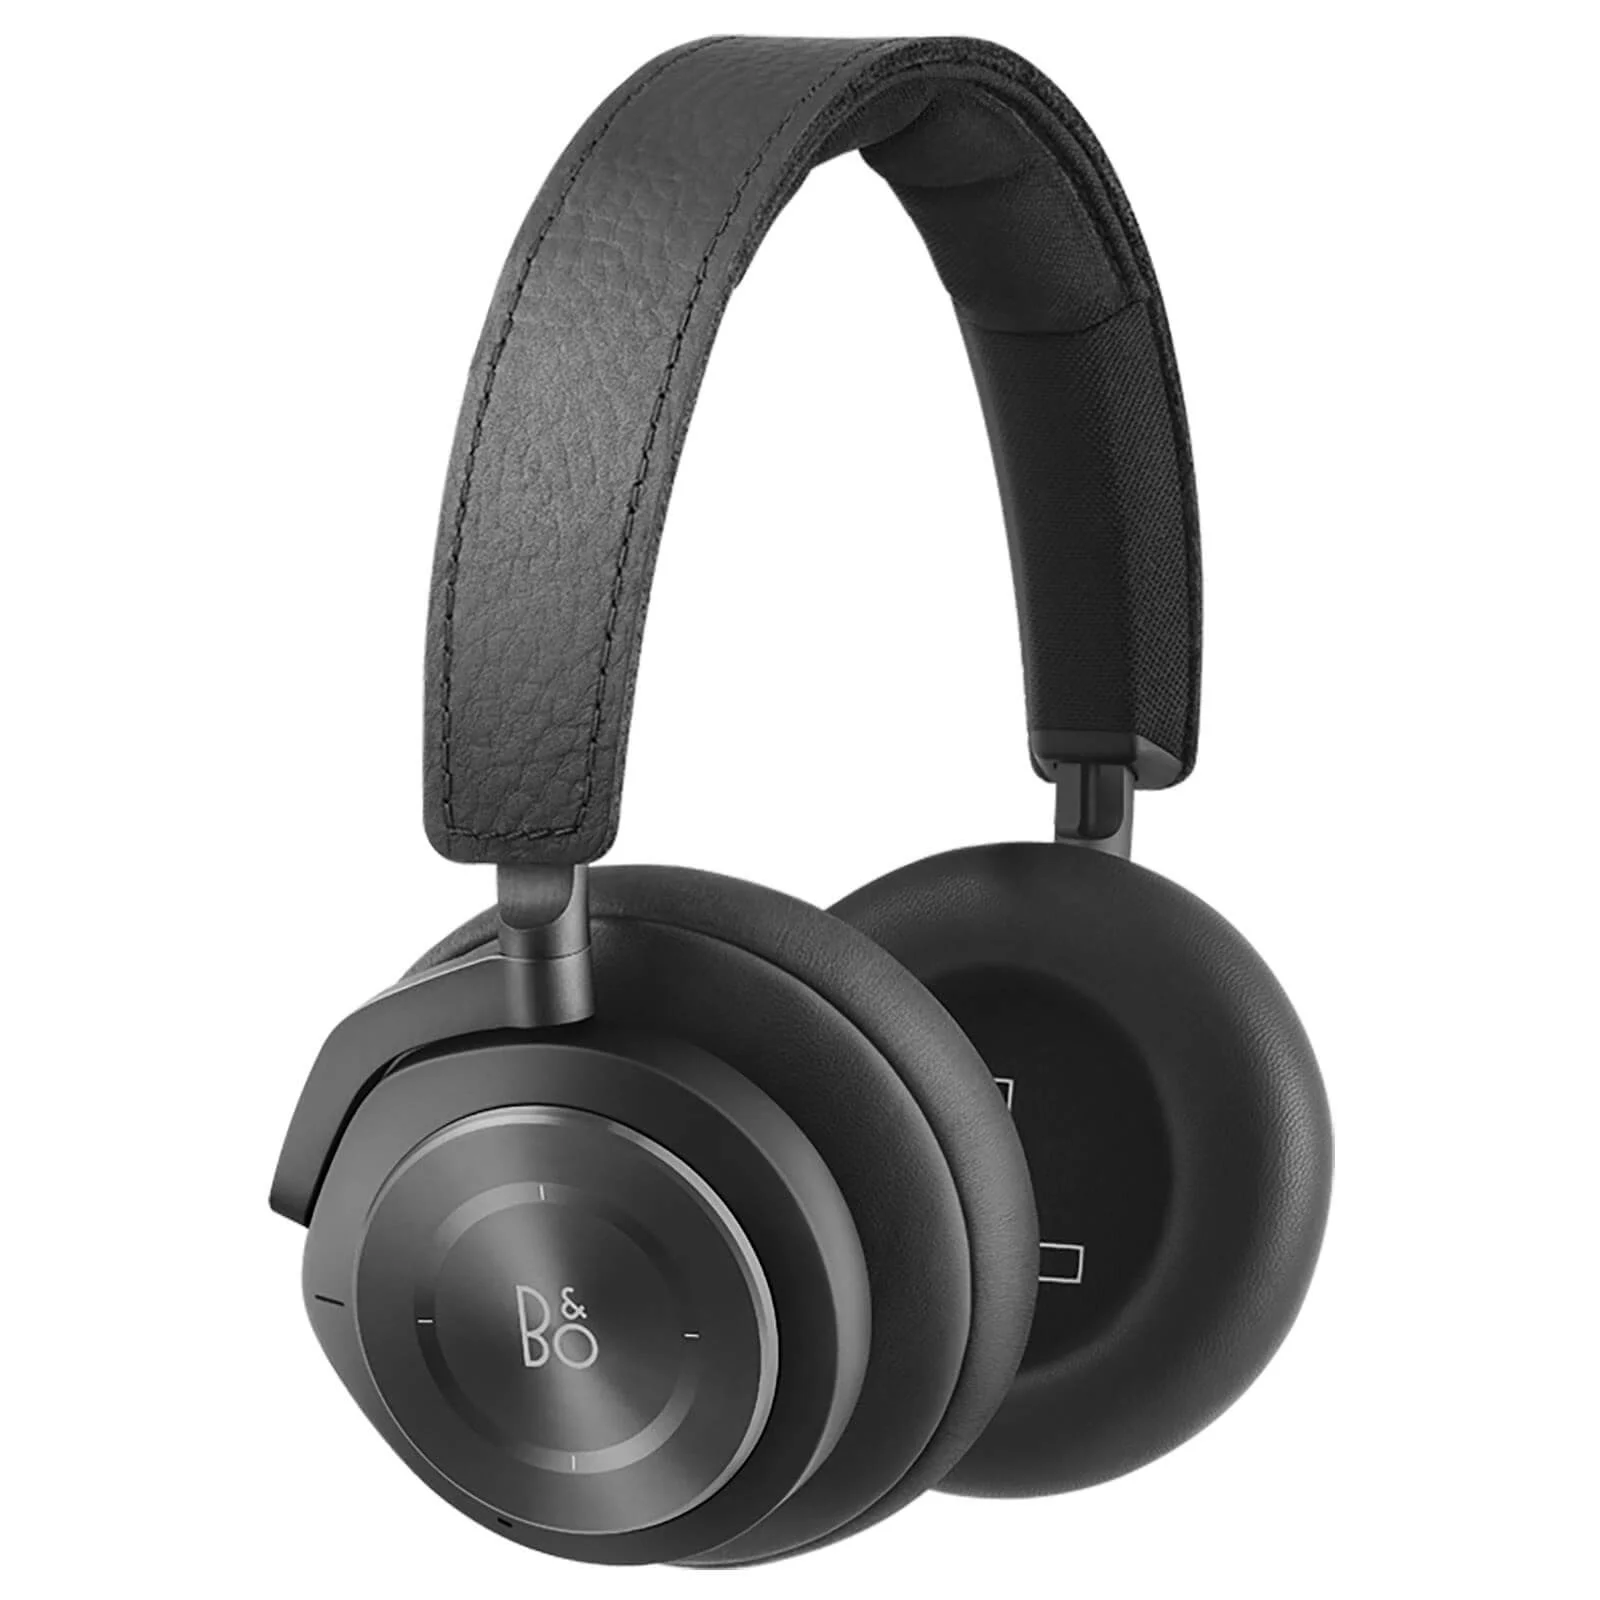 Bang & Olufsen H9 3.0 Over Ear Noise Cancelling Headphones - Matte Black Image 1